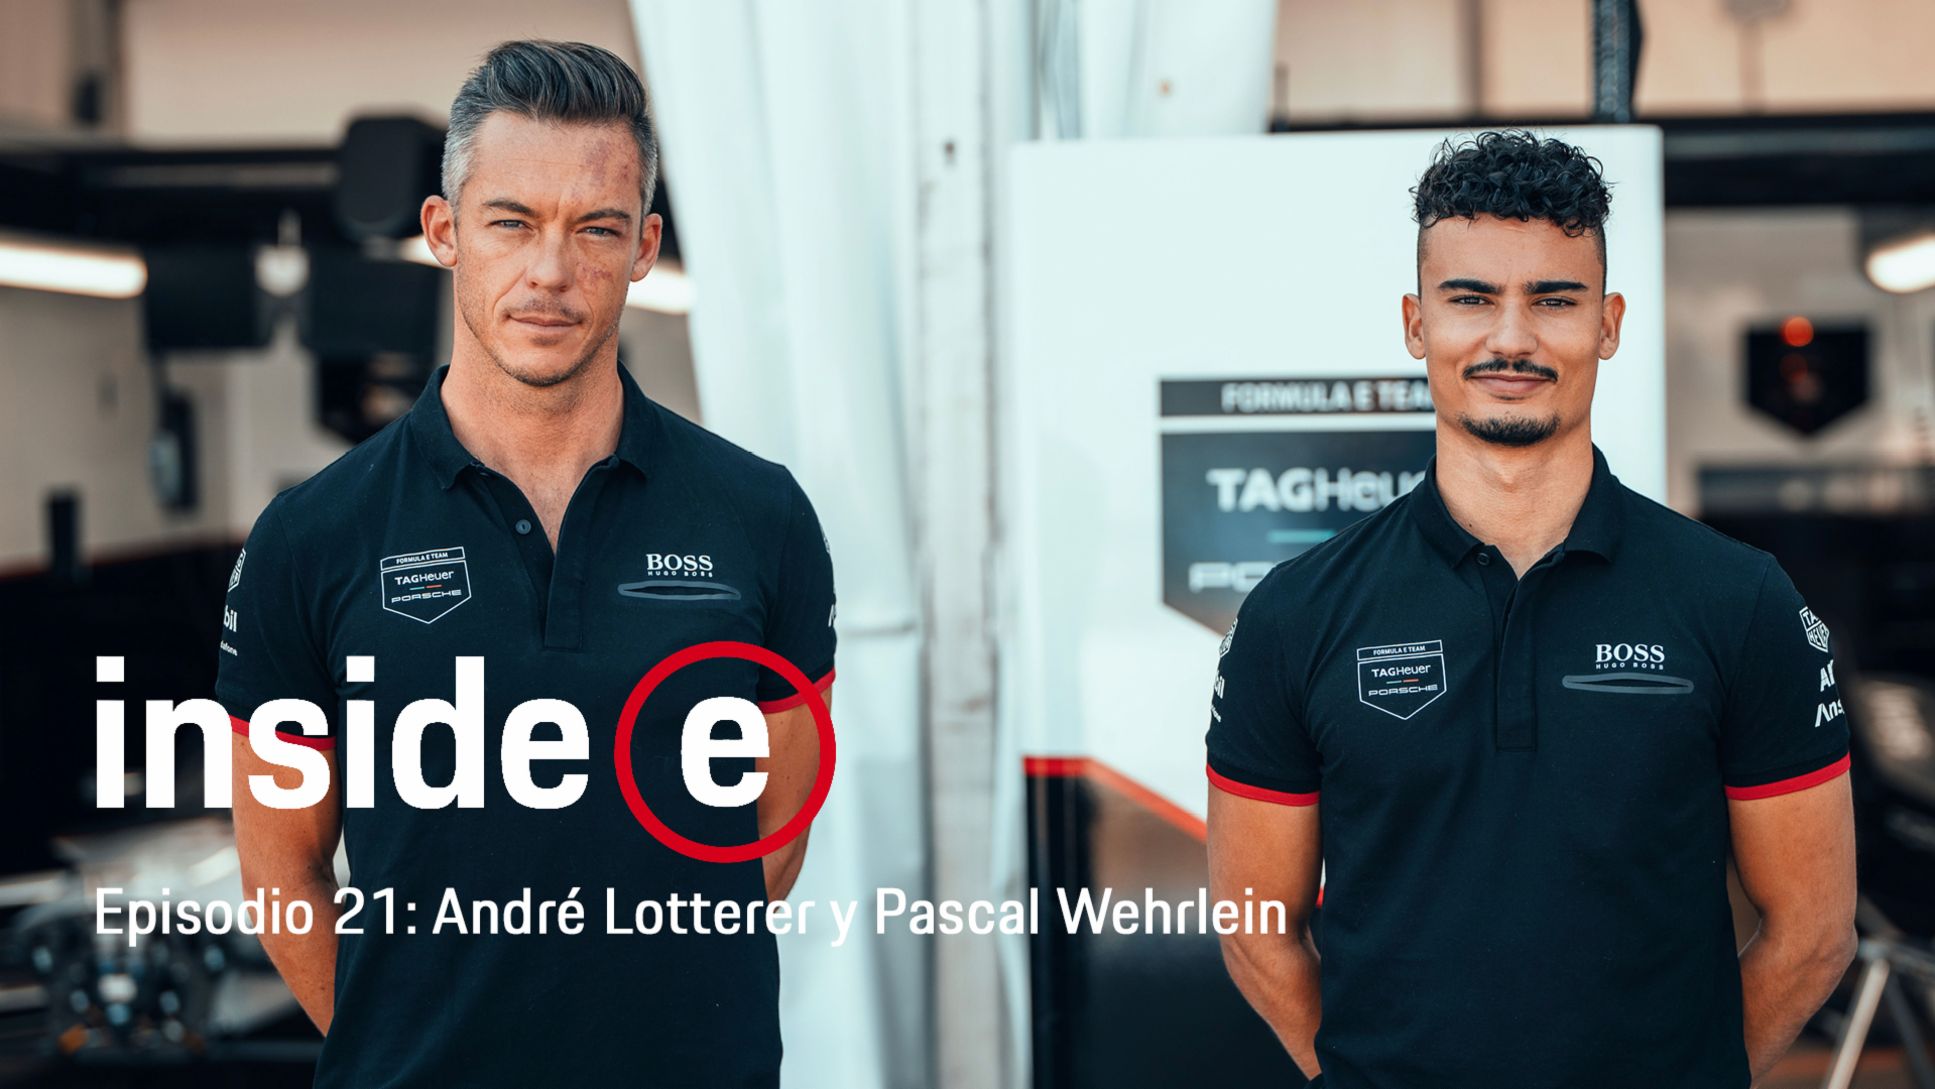 André Lotterer y Pascal Wehrlein, podcast “Inside E”, 2021, Porsche AG